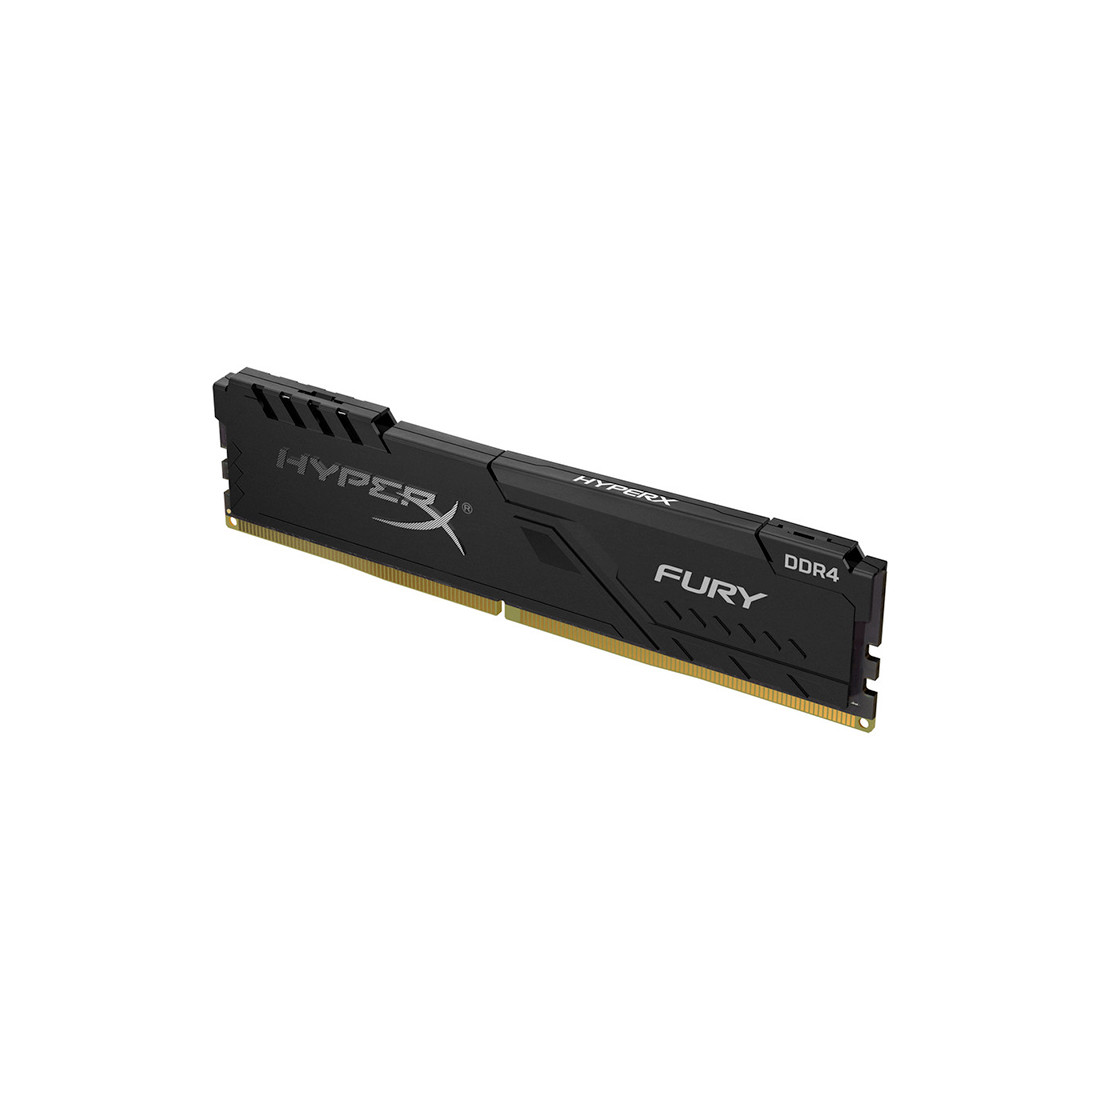 Kingston HX430C15FB3/8 HyperX Fury Модуль памяти DDR4, 8GB, DIMM <PC4-24000/3000MHz>, Чёрный